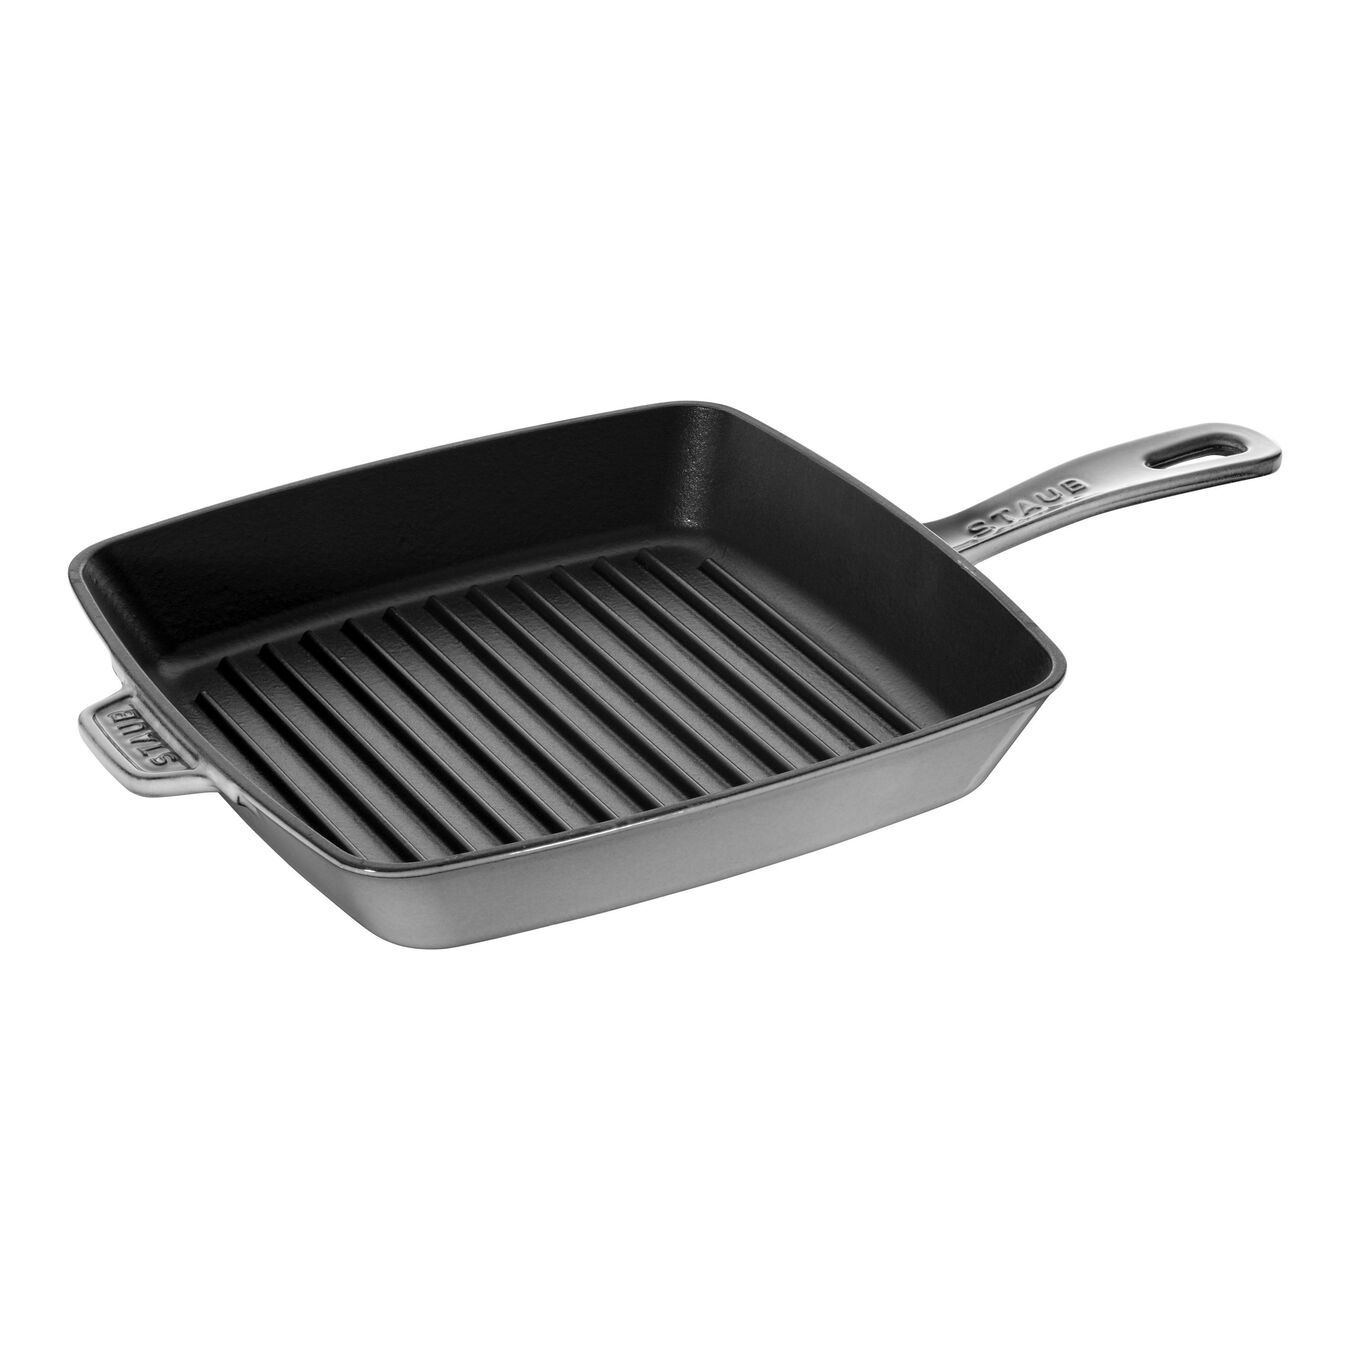 26 x 26 cm square Cast iron American grill graphite-grey,,large 1